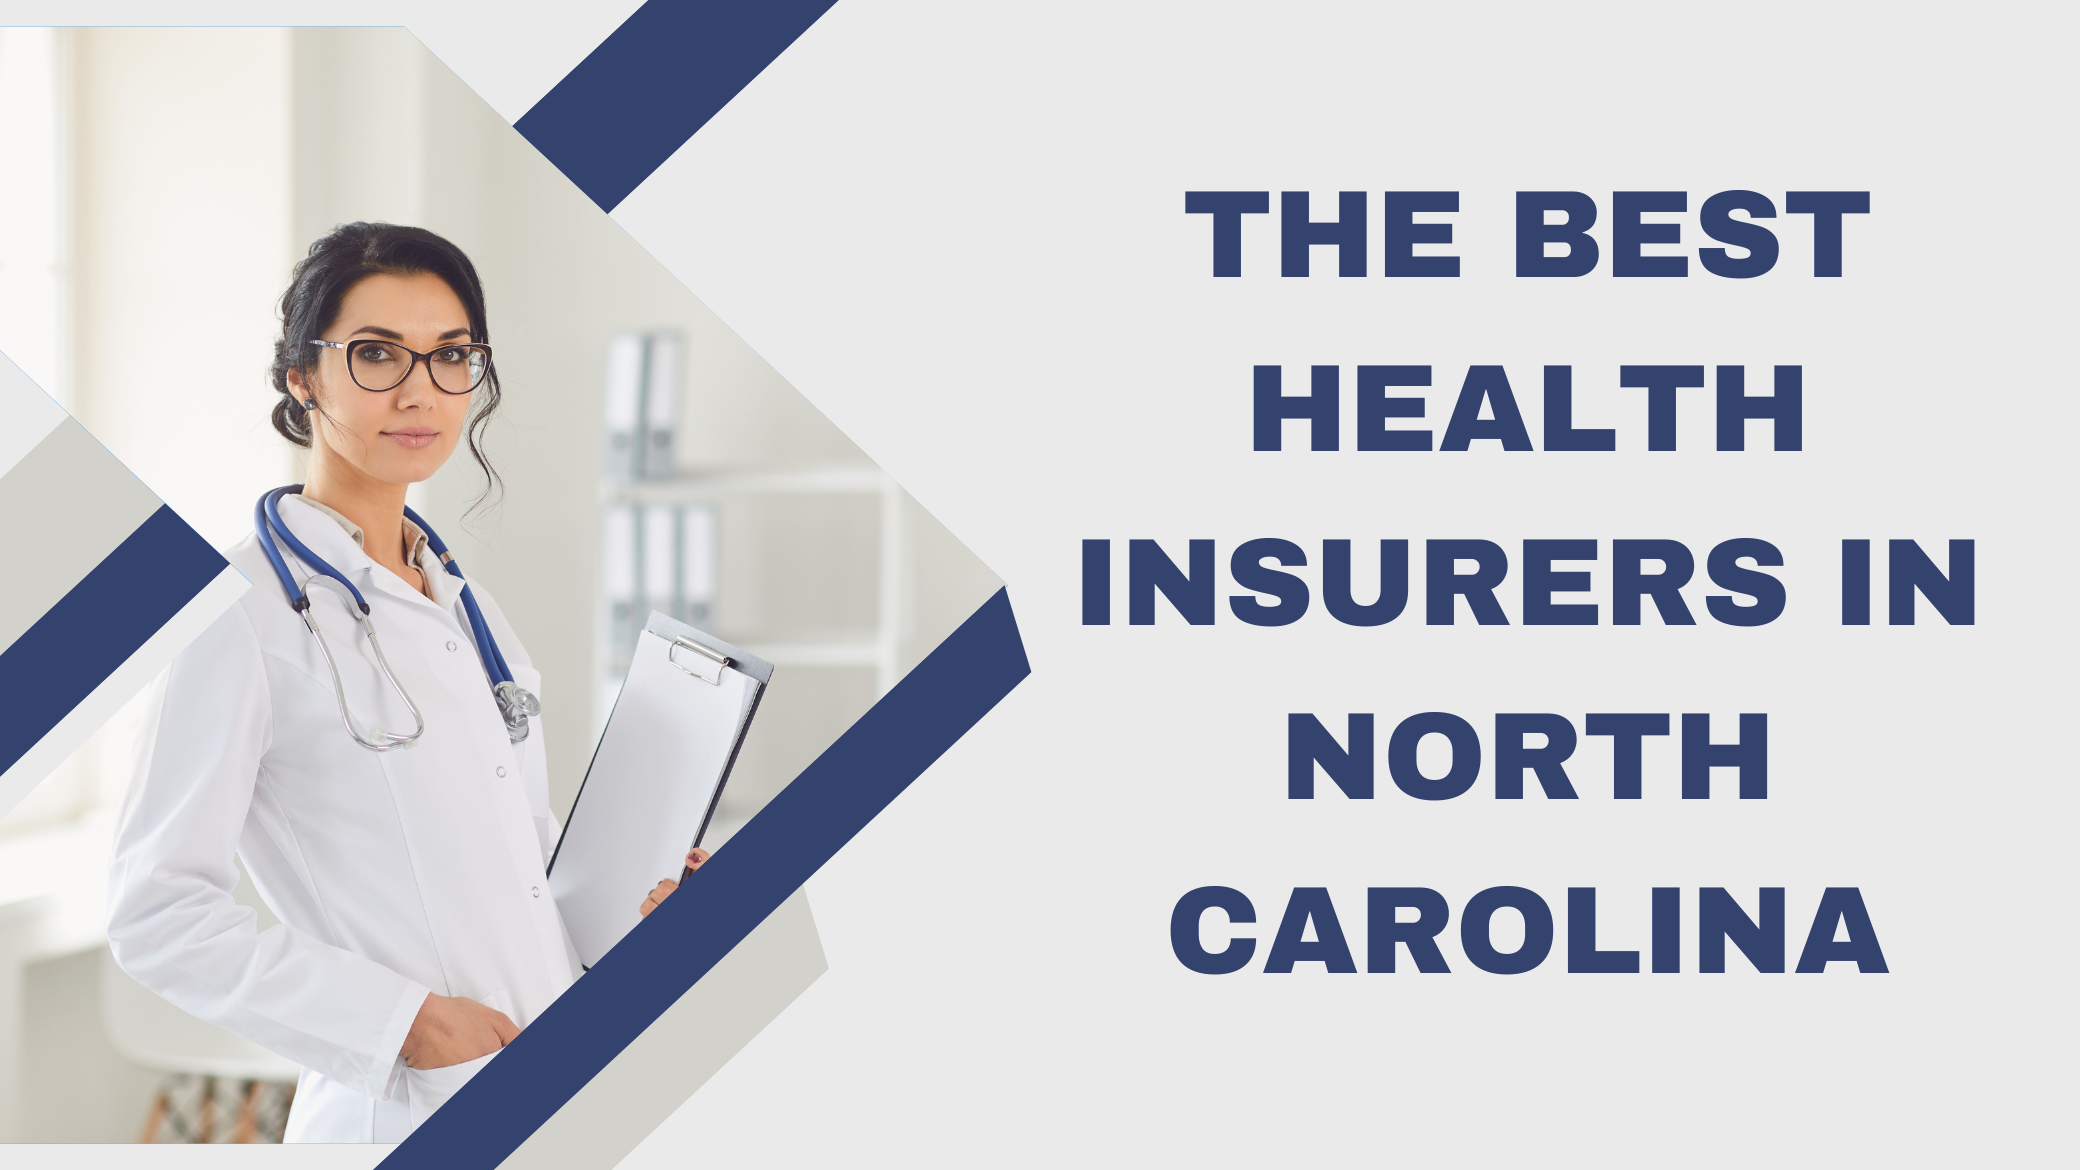 The Best Health Insurers In North Carolina